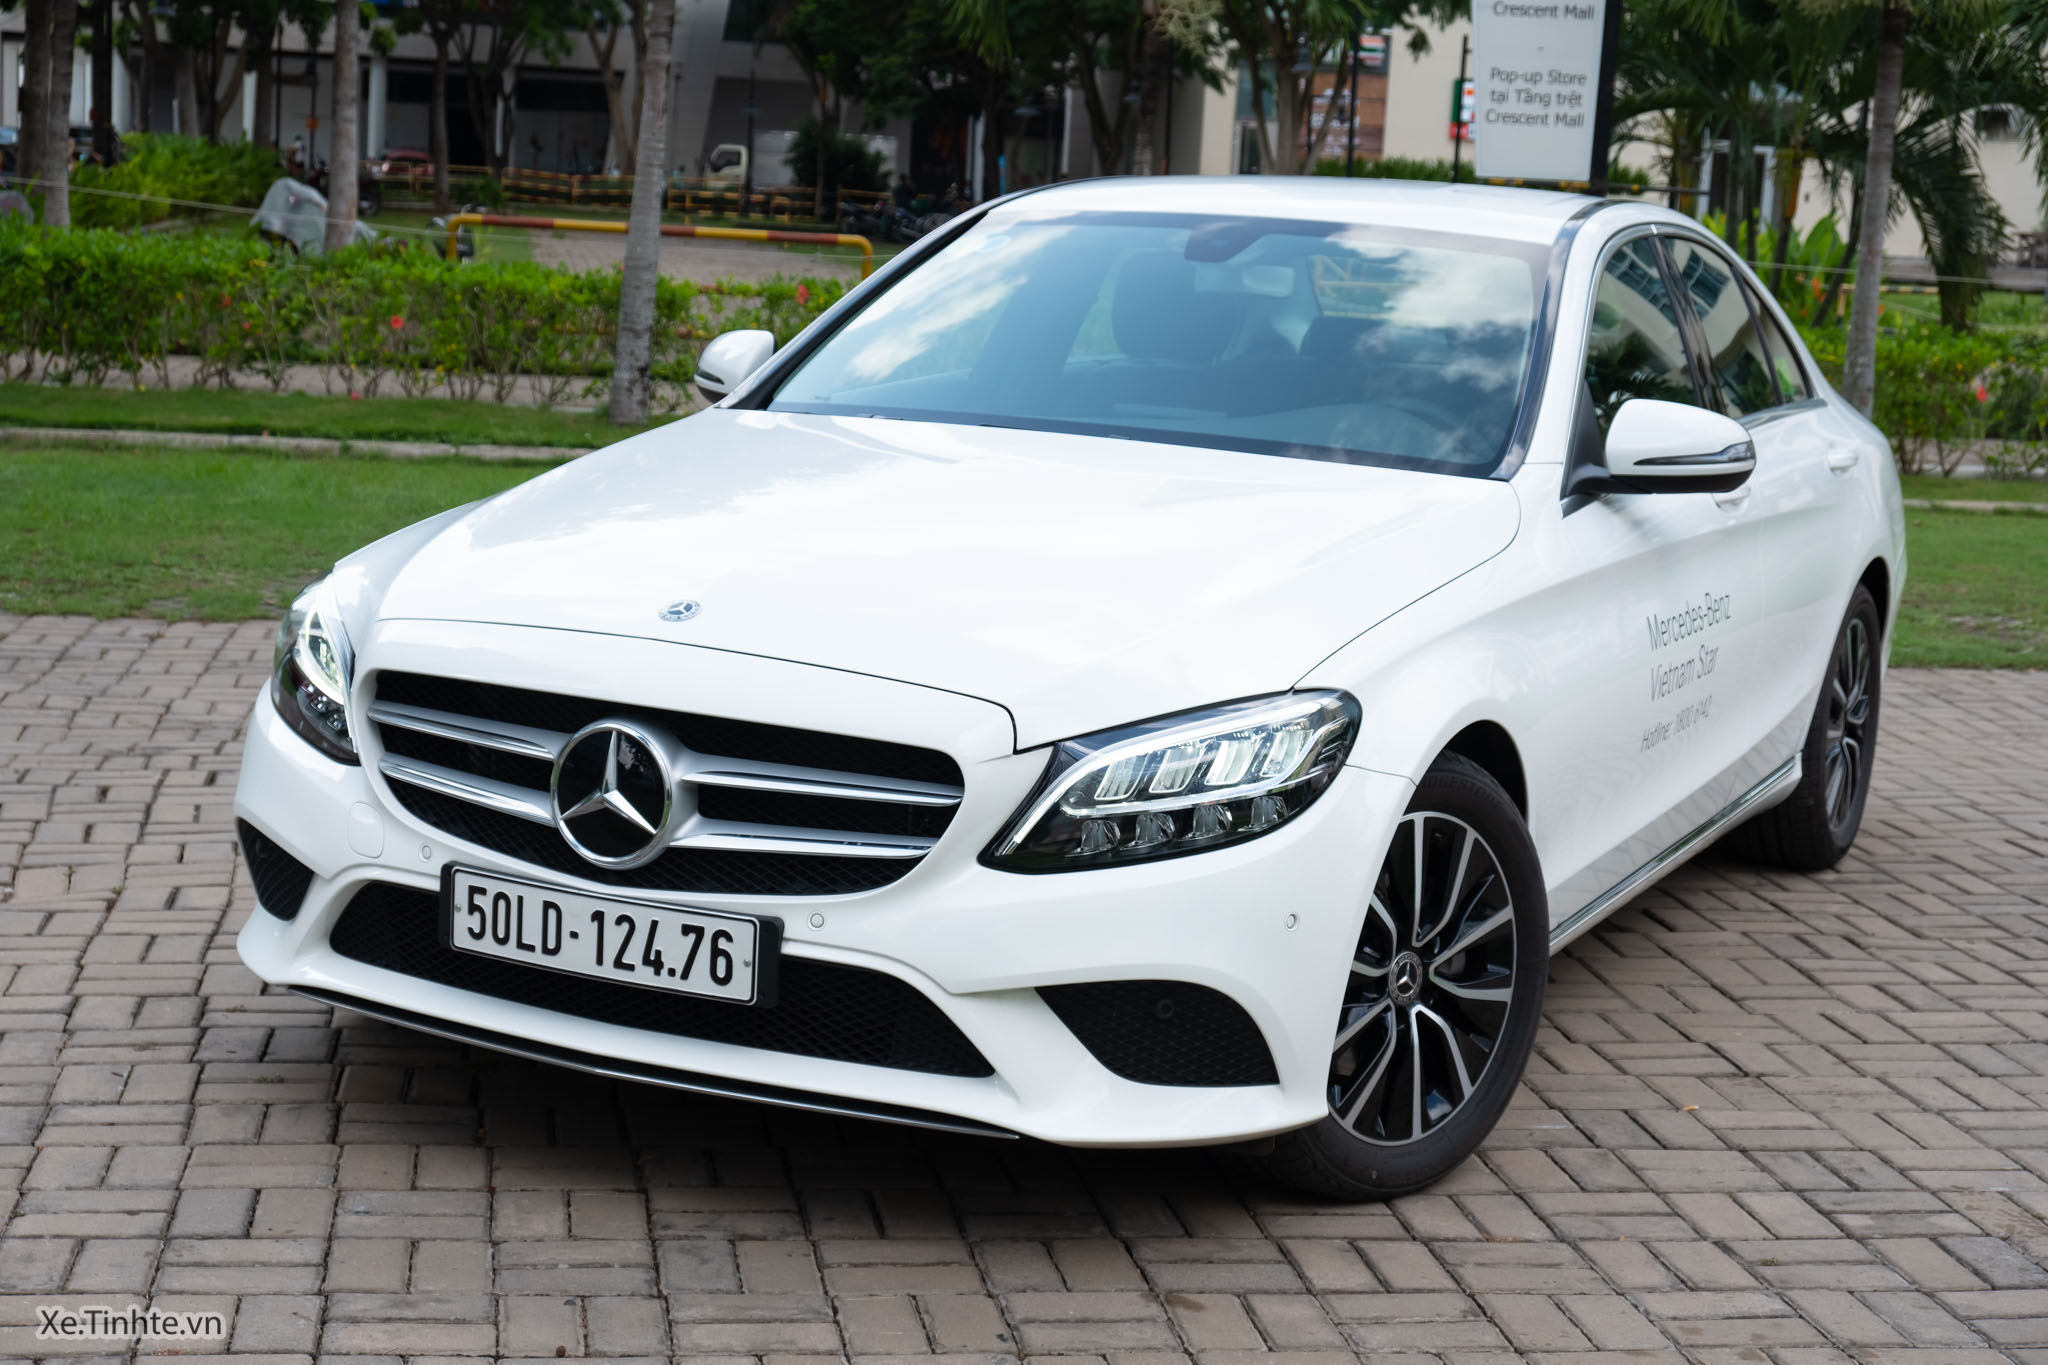 Mercedes_C200 2019_Xe.tinhte.vn-7466.jpg